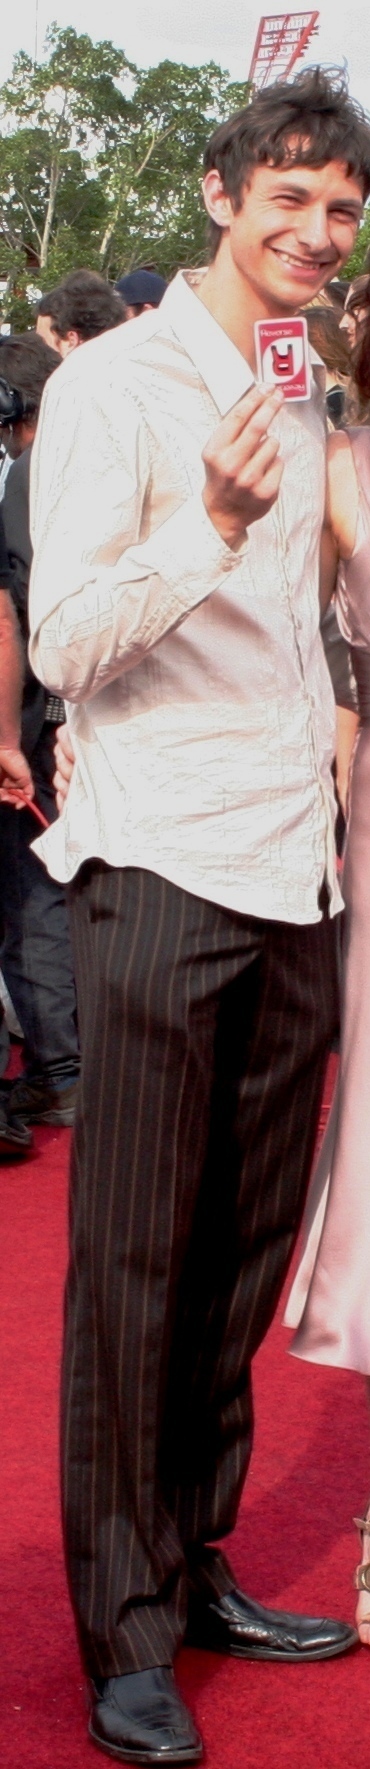 Gotye - 2007 ARIA Winner for Australian Best Male Artist.  Photo taken by Chrissy Layton, AusNotebook Music & Creative.